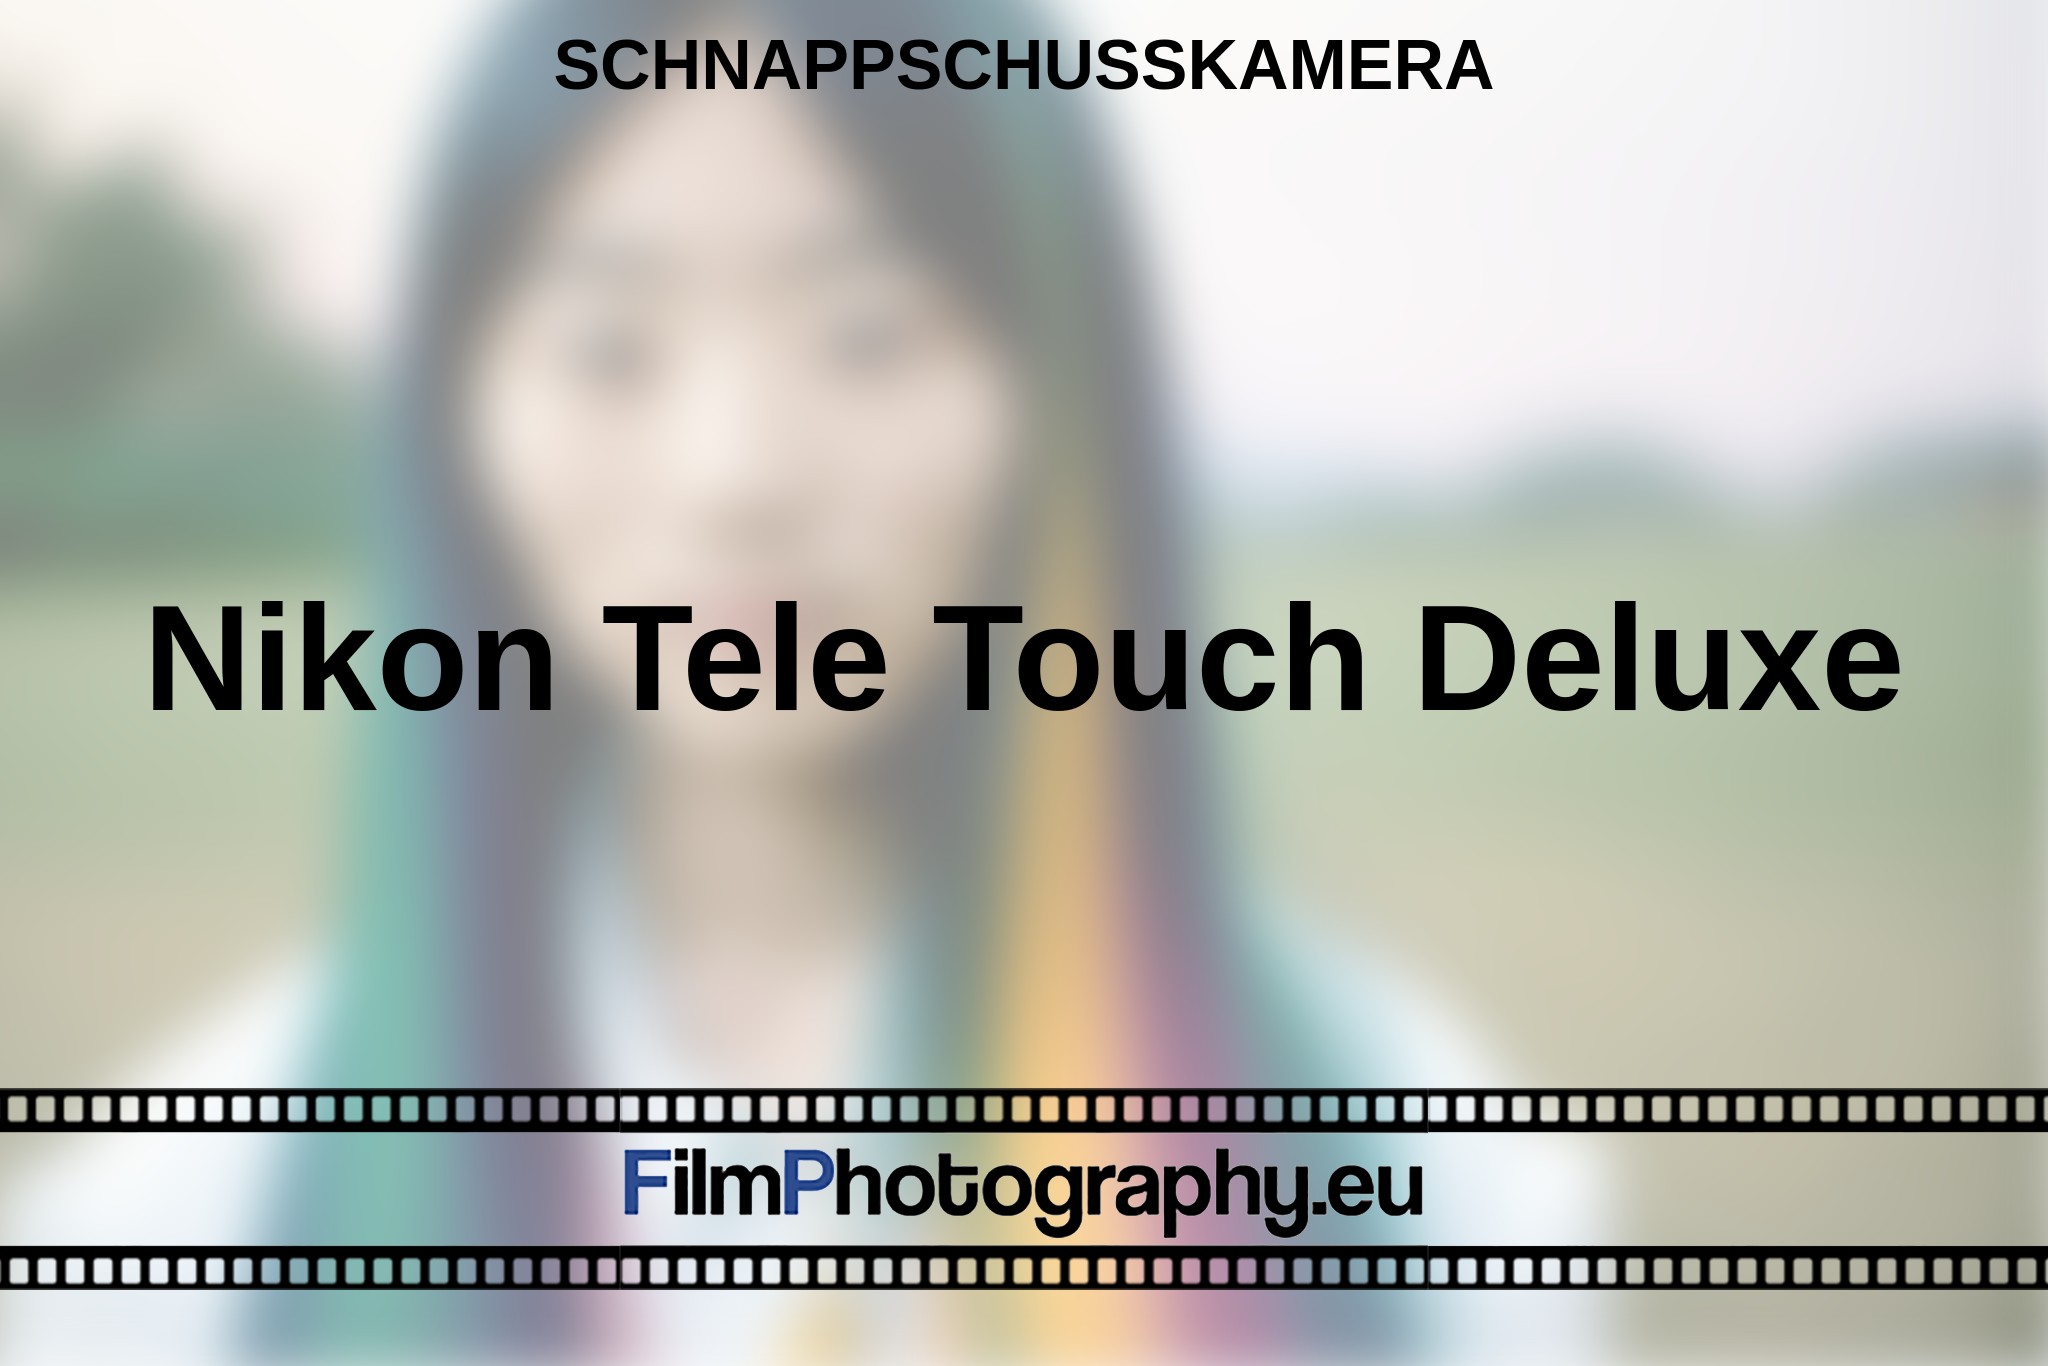 nikon-tele-touch-deluxe-schnappschusskamera-bnv.jpg